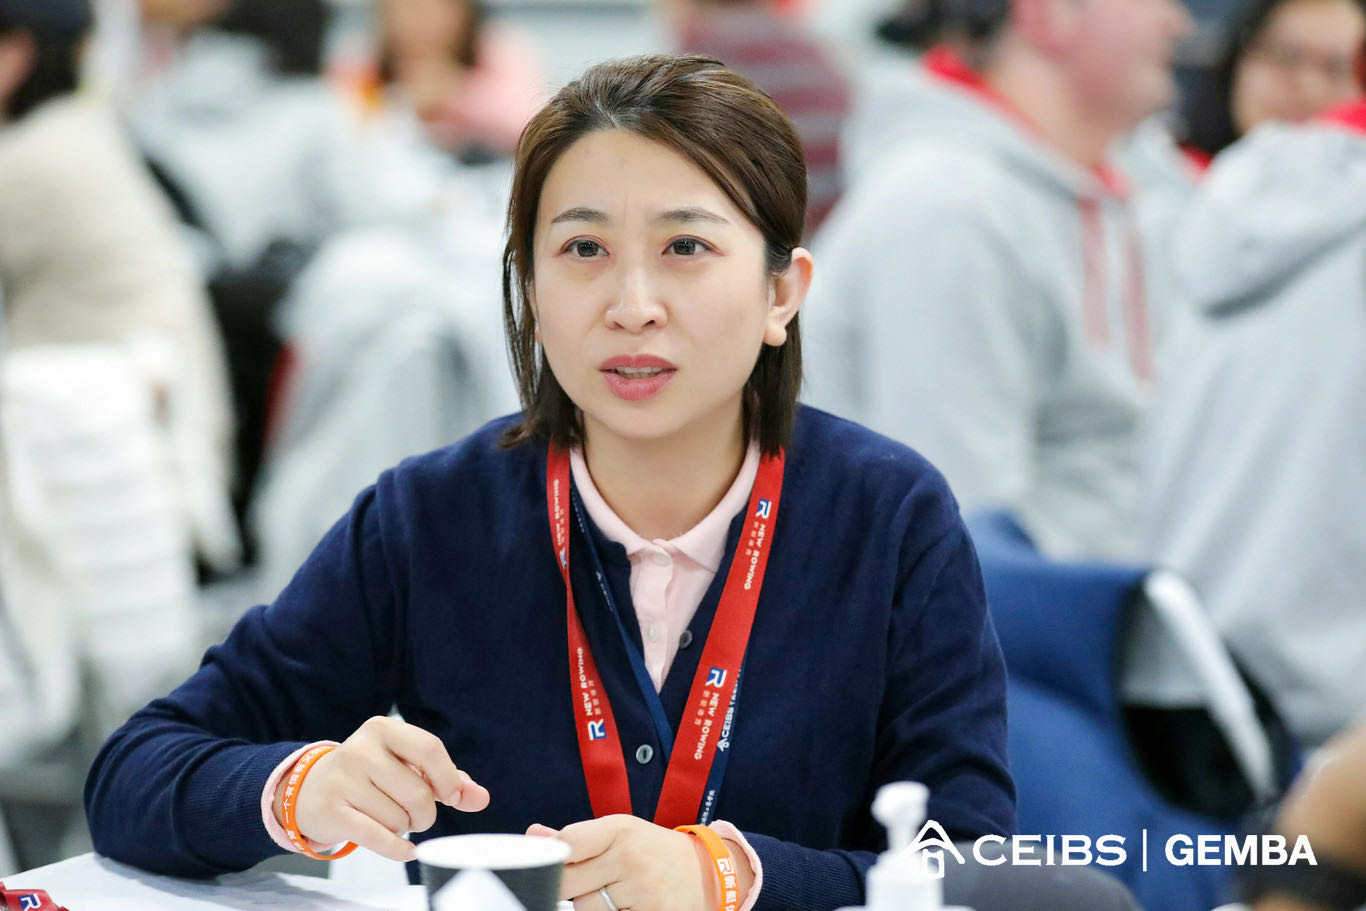 Vivian Wang, CEIBS Global EMBA 2020